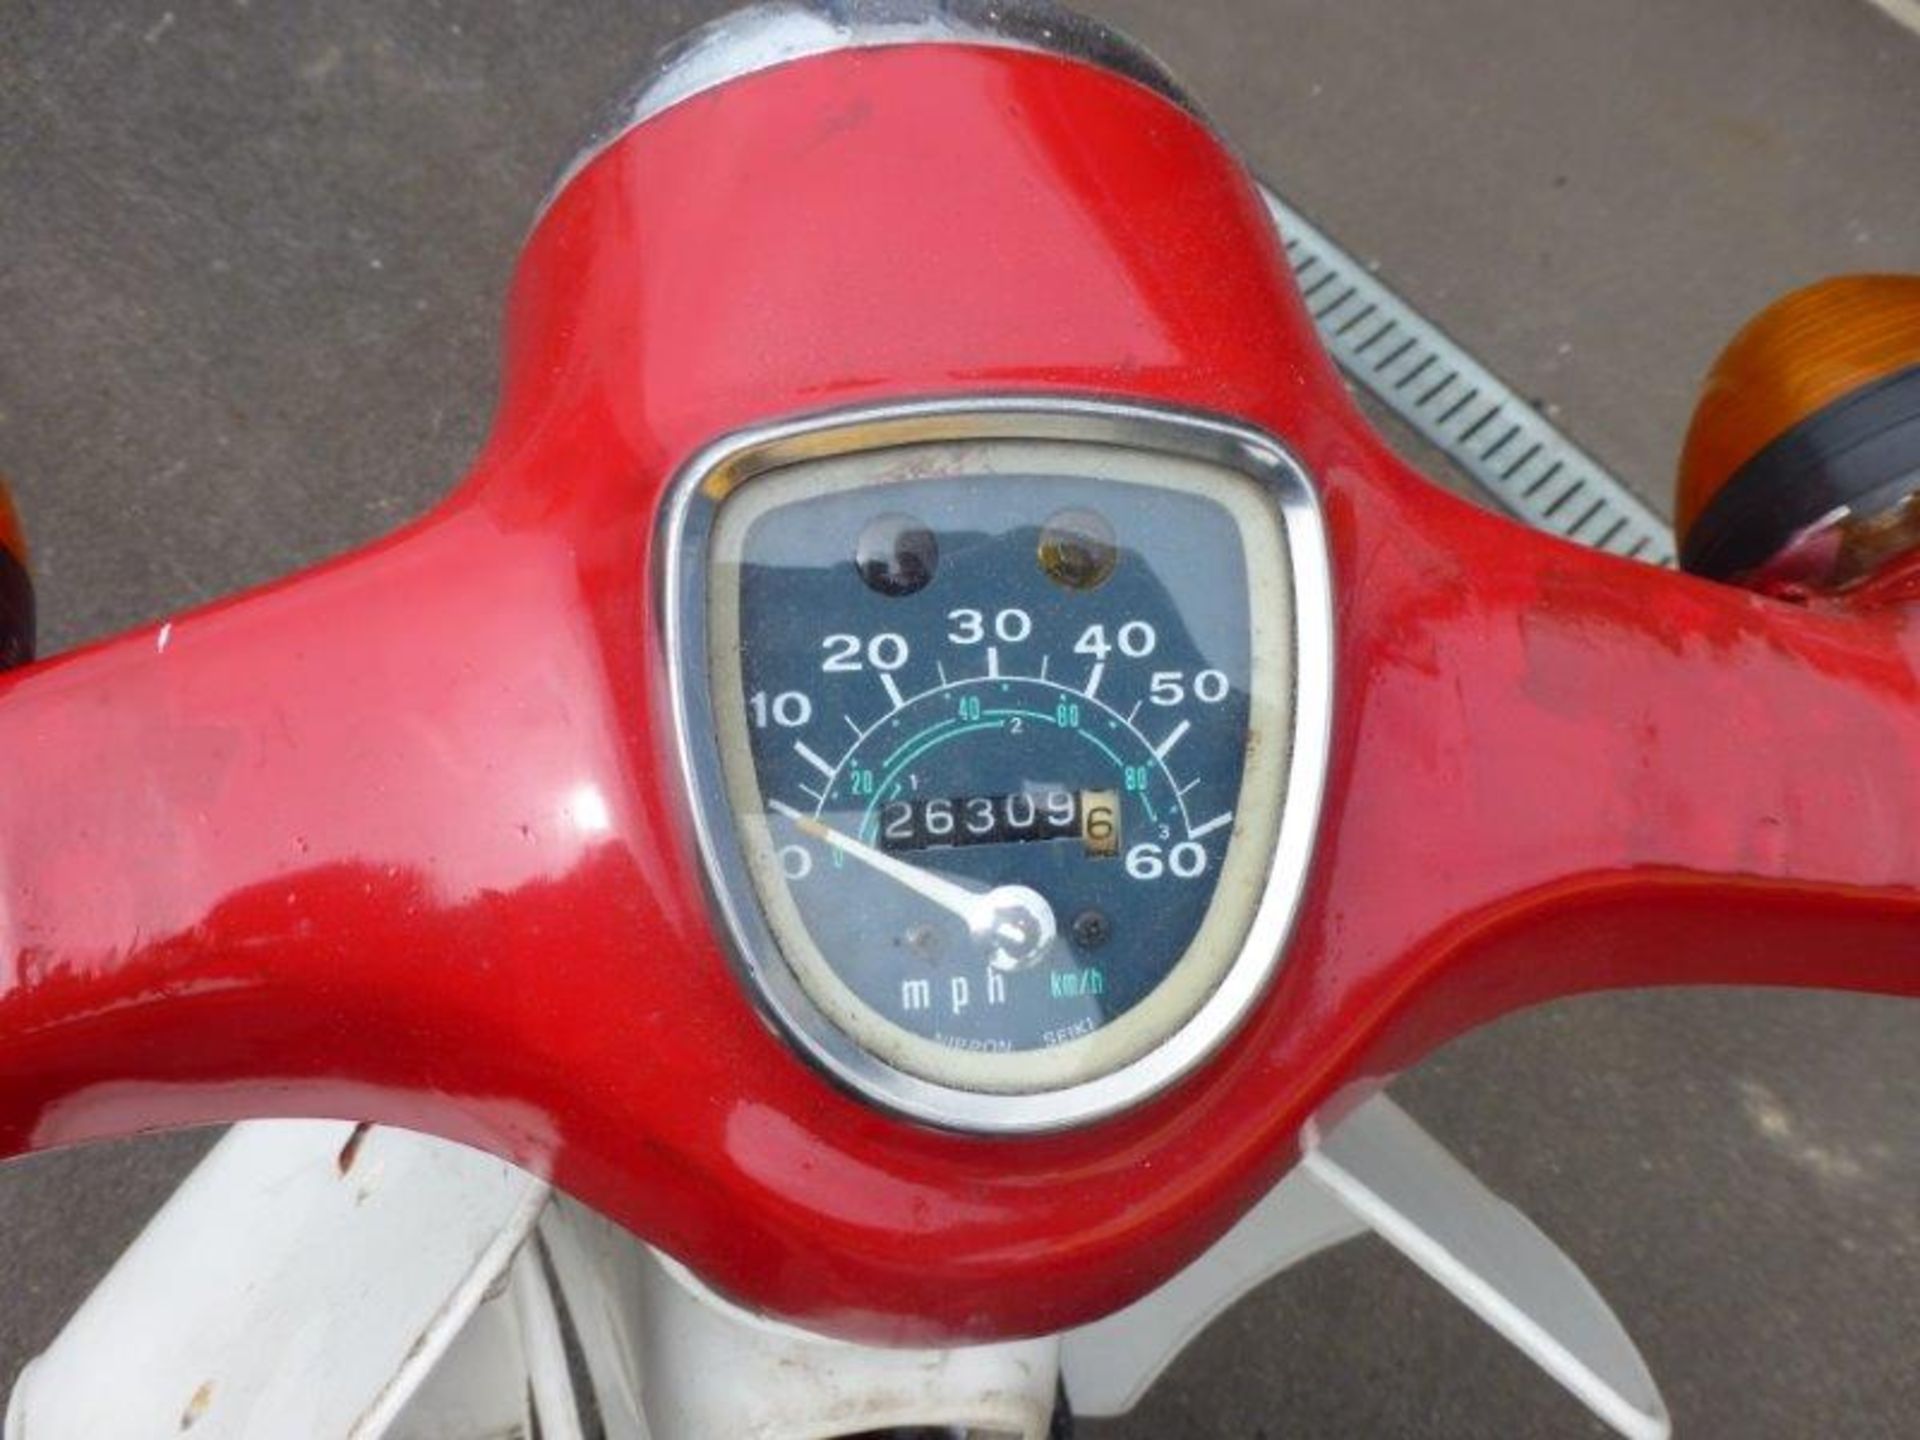 Honda C90 Step Through motorcycle, 90cc (Red)  Registration no. RGP 55V  VIN no. C905160187  Date of - Image 4 of 4